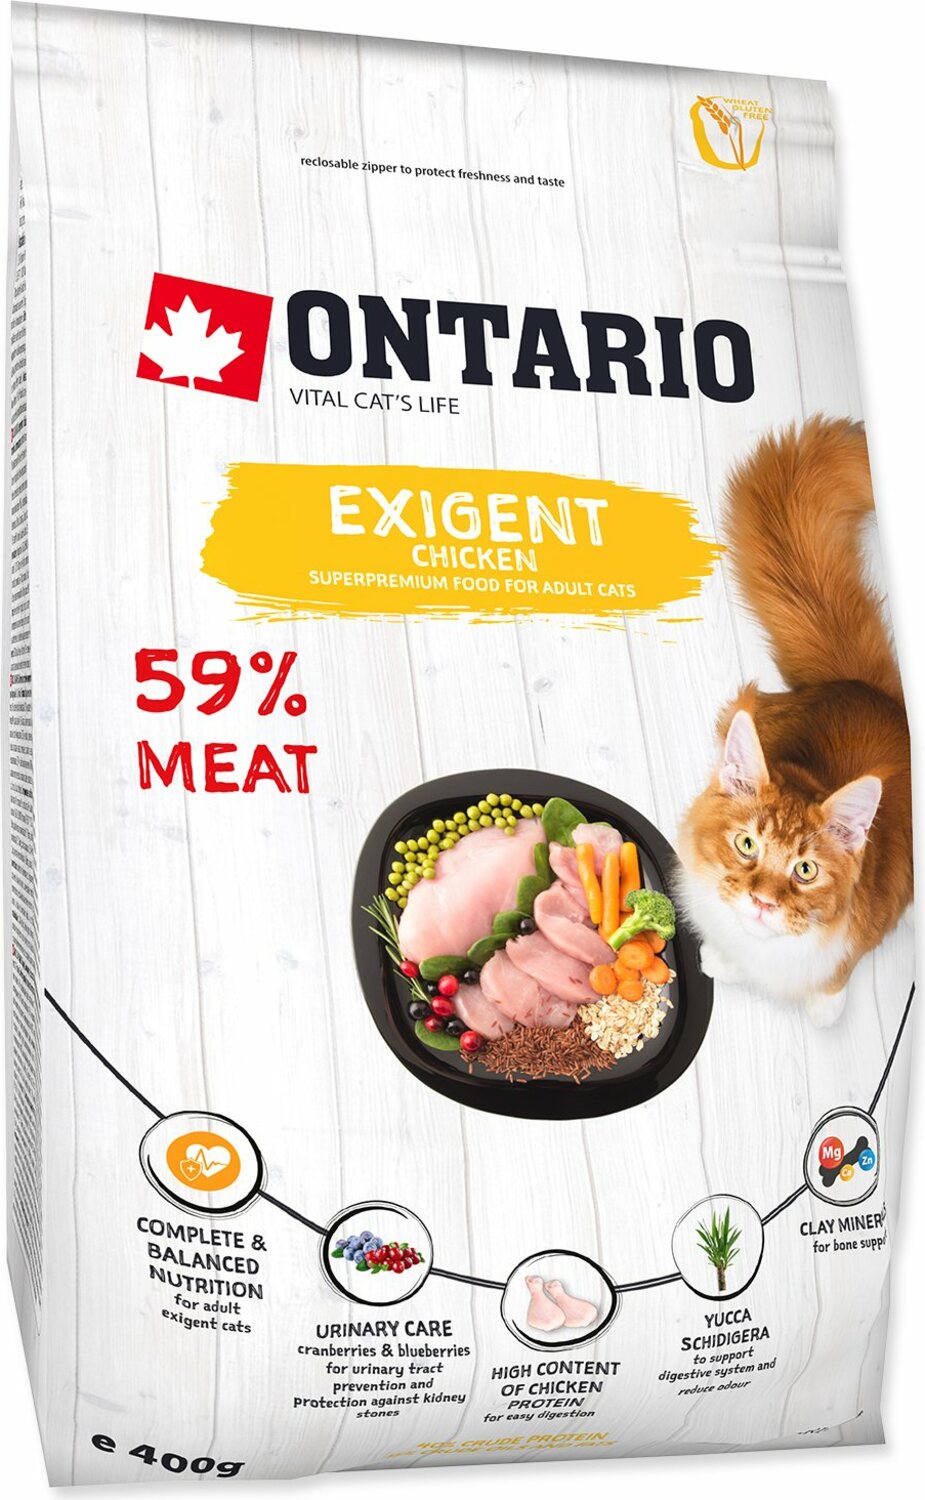 Krmivo Ontario Cat Exigent 0,4kg